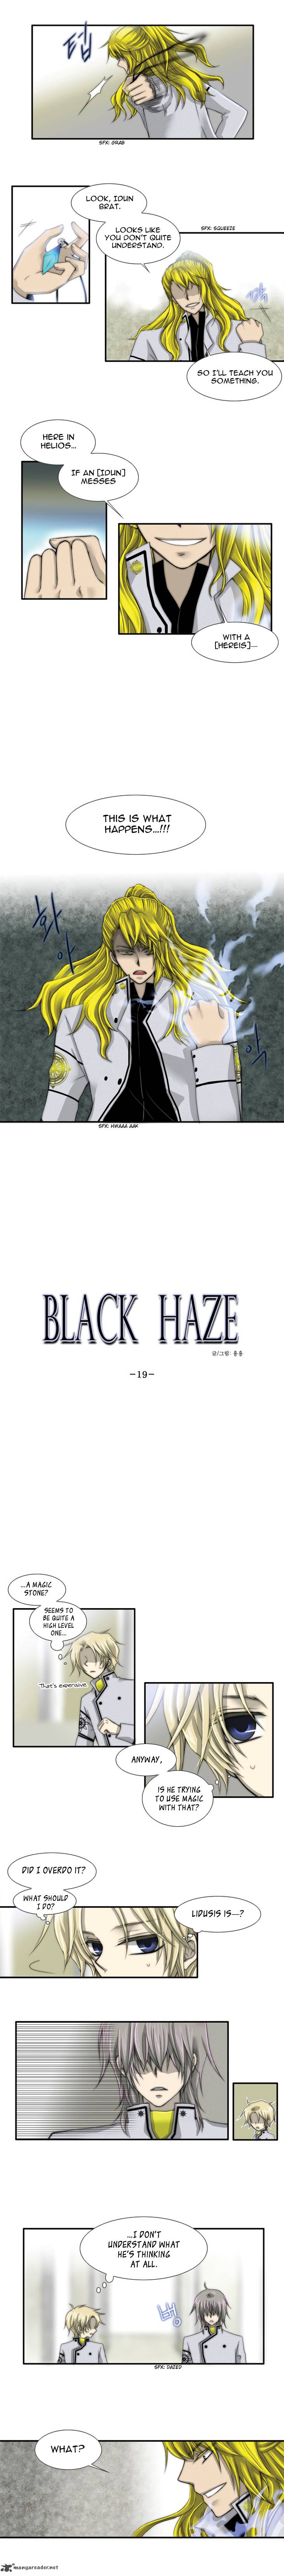 Black Haze Chapter 19 Page 2